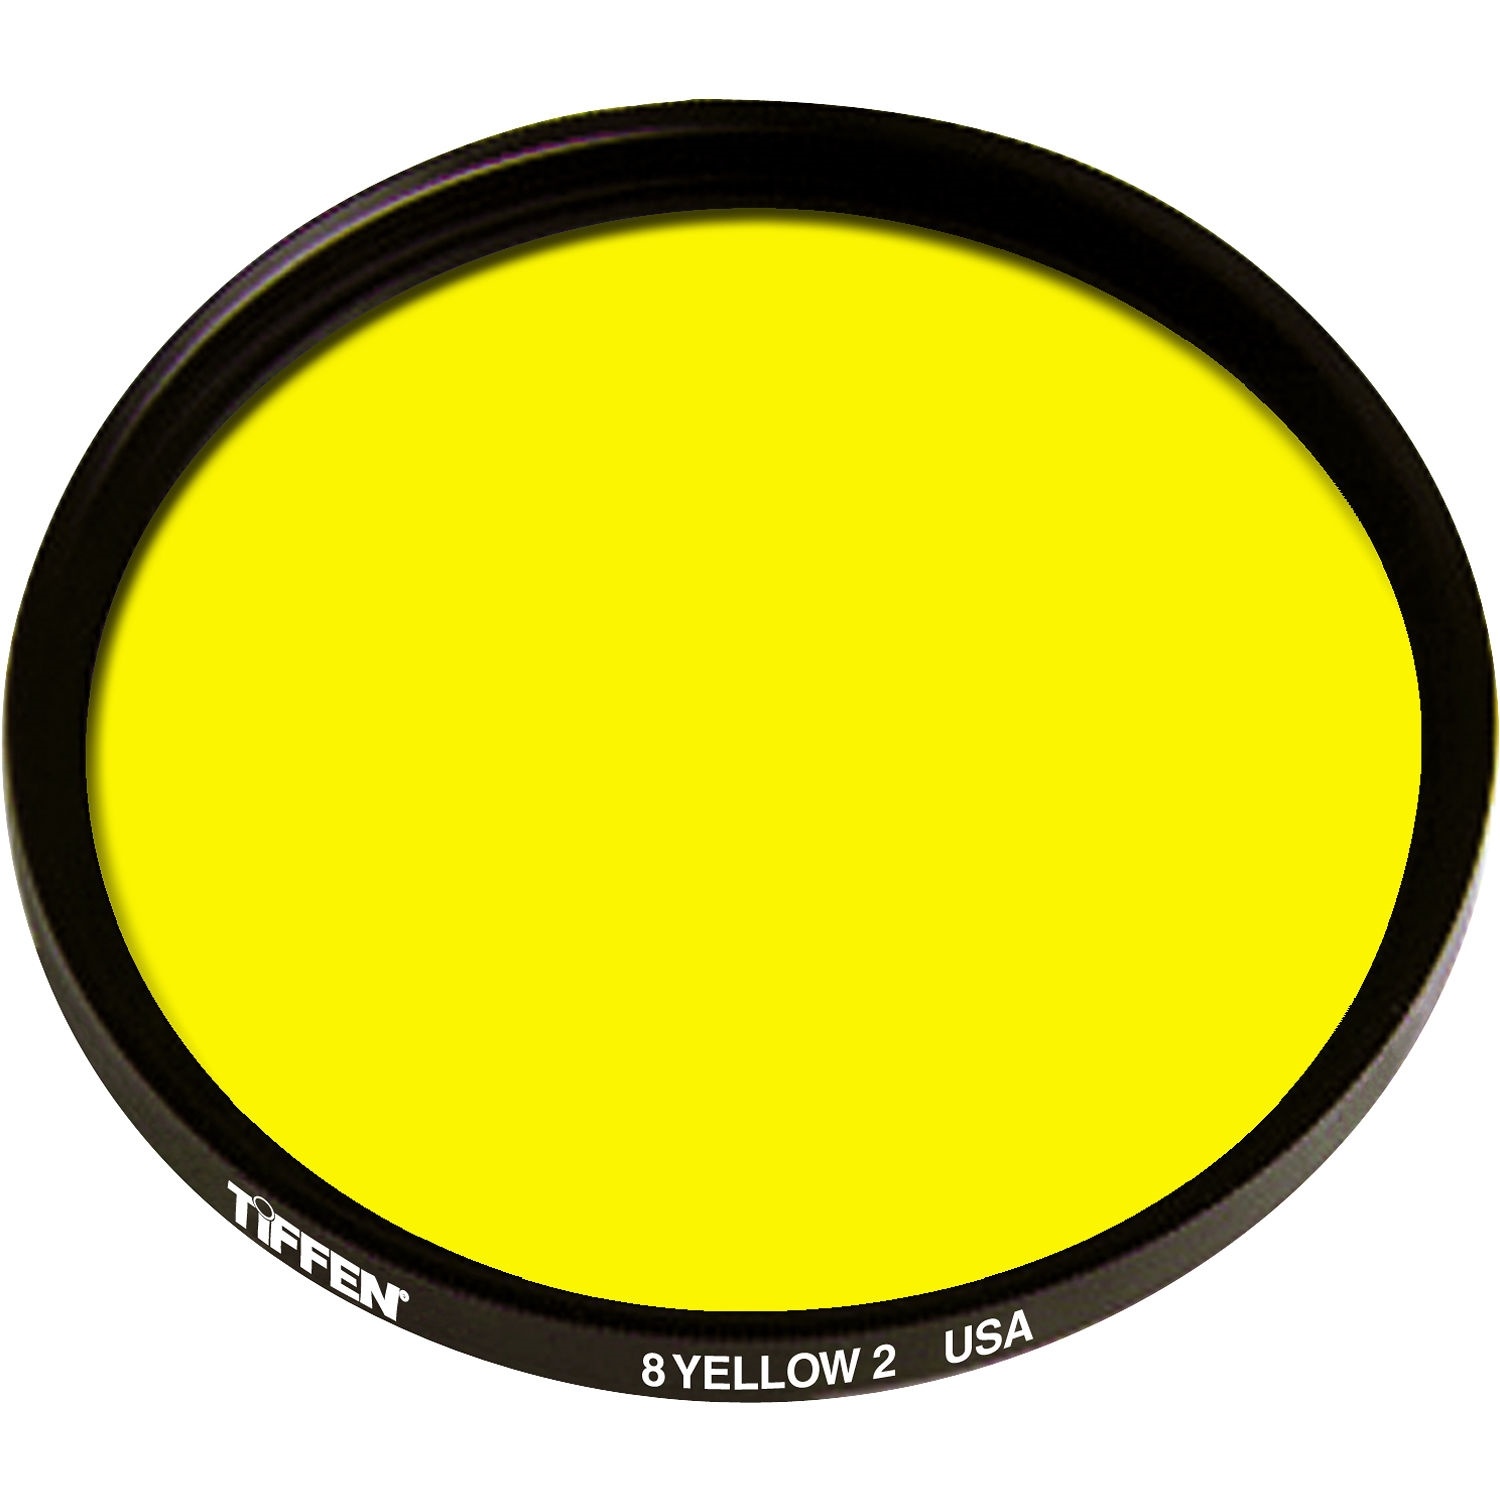 Tiffen 55mm Yellow 2 8 Glass Filter for Black & White Film